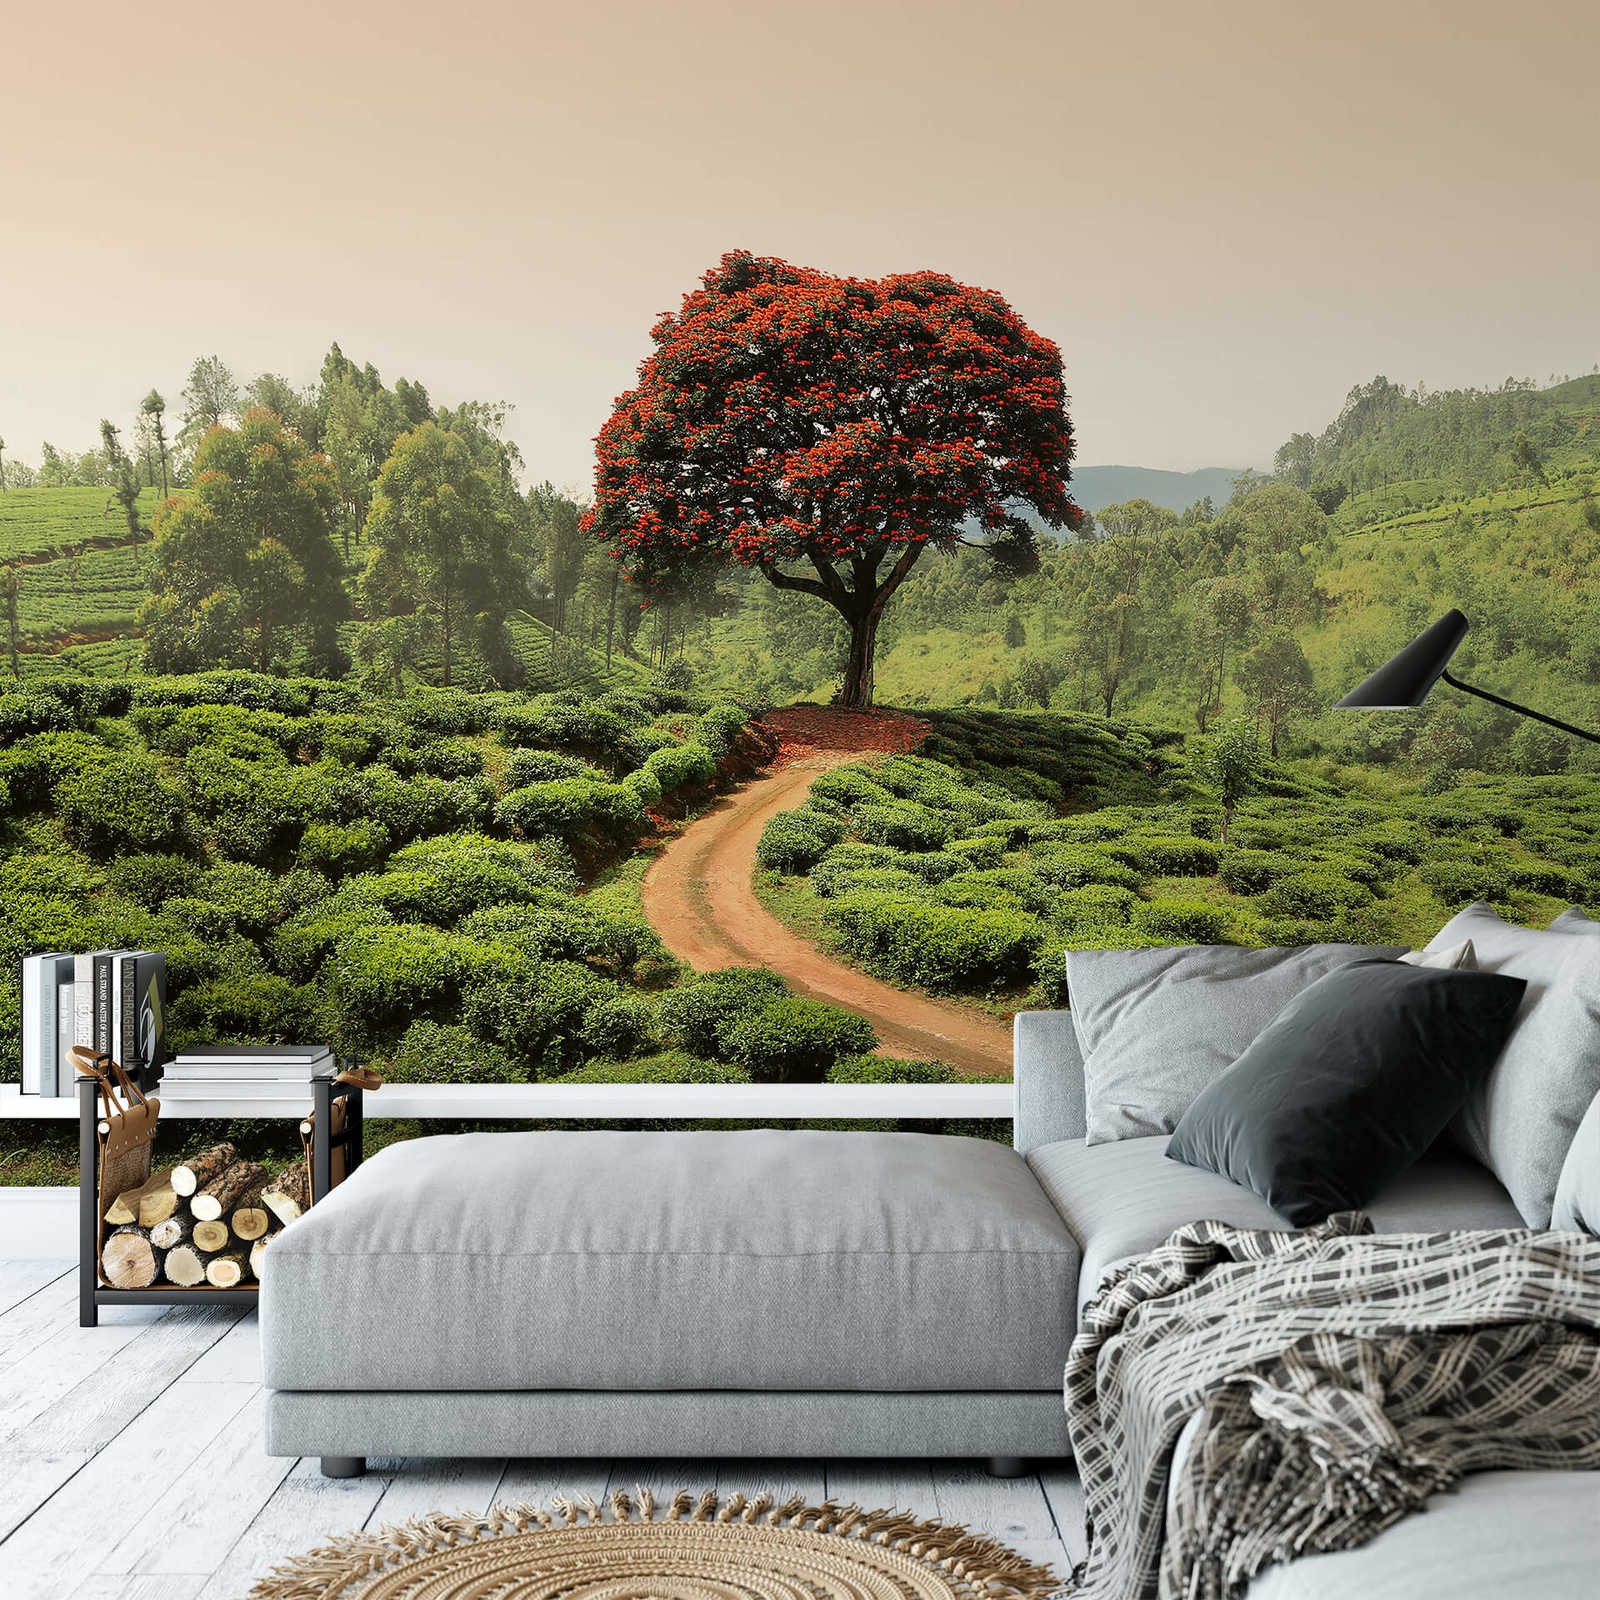             Fototapete Landschaft in Sri Lanka – Grün, Rot, Braun
        